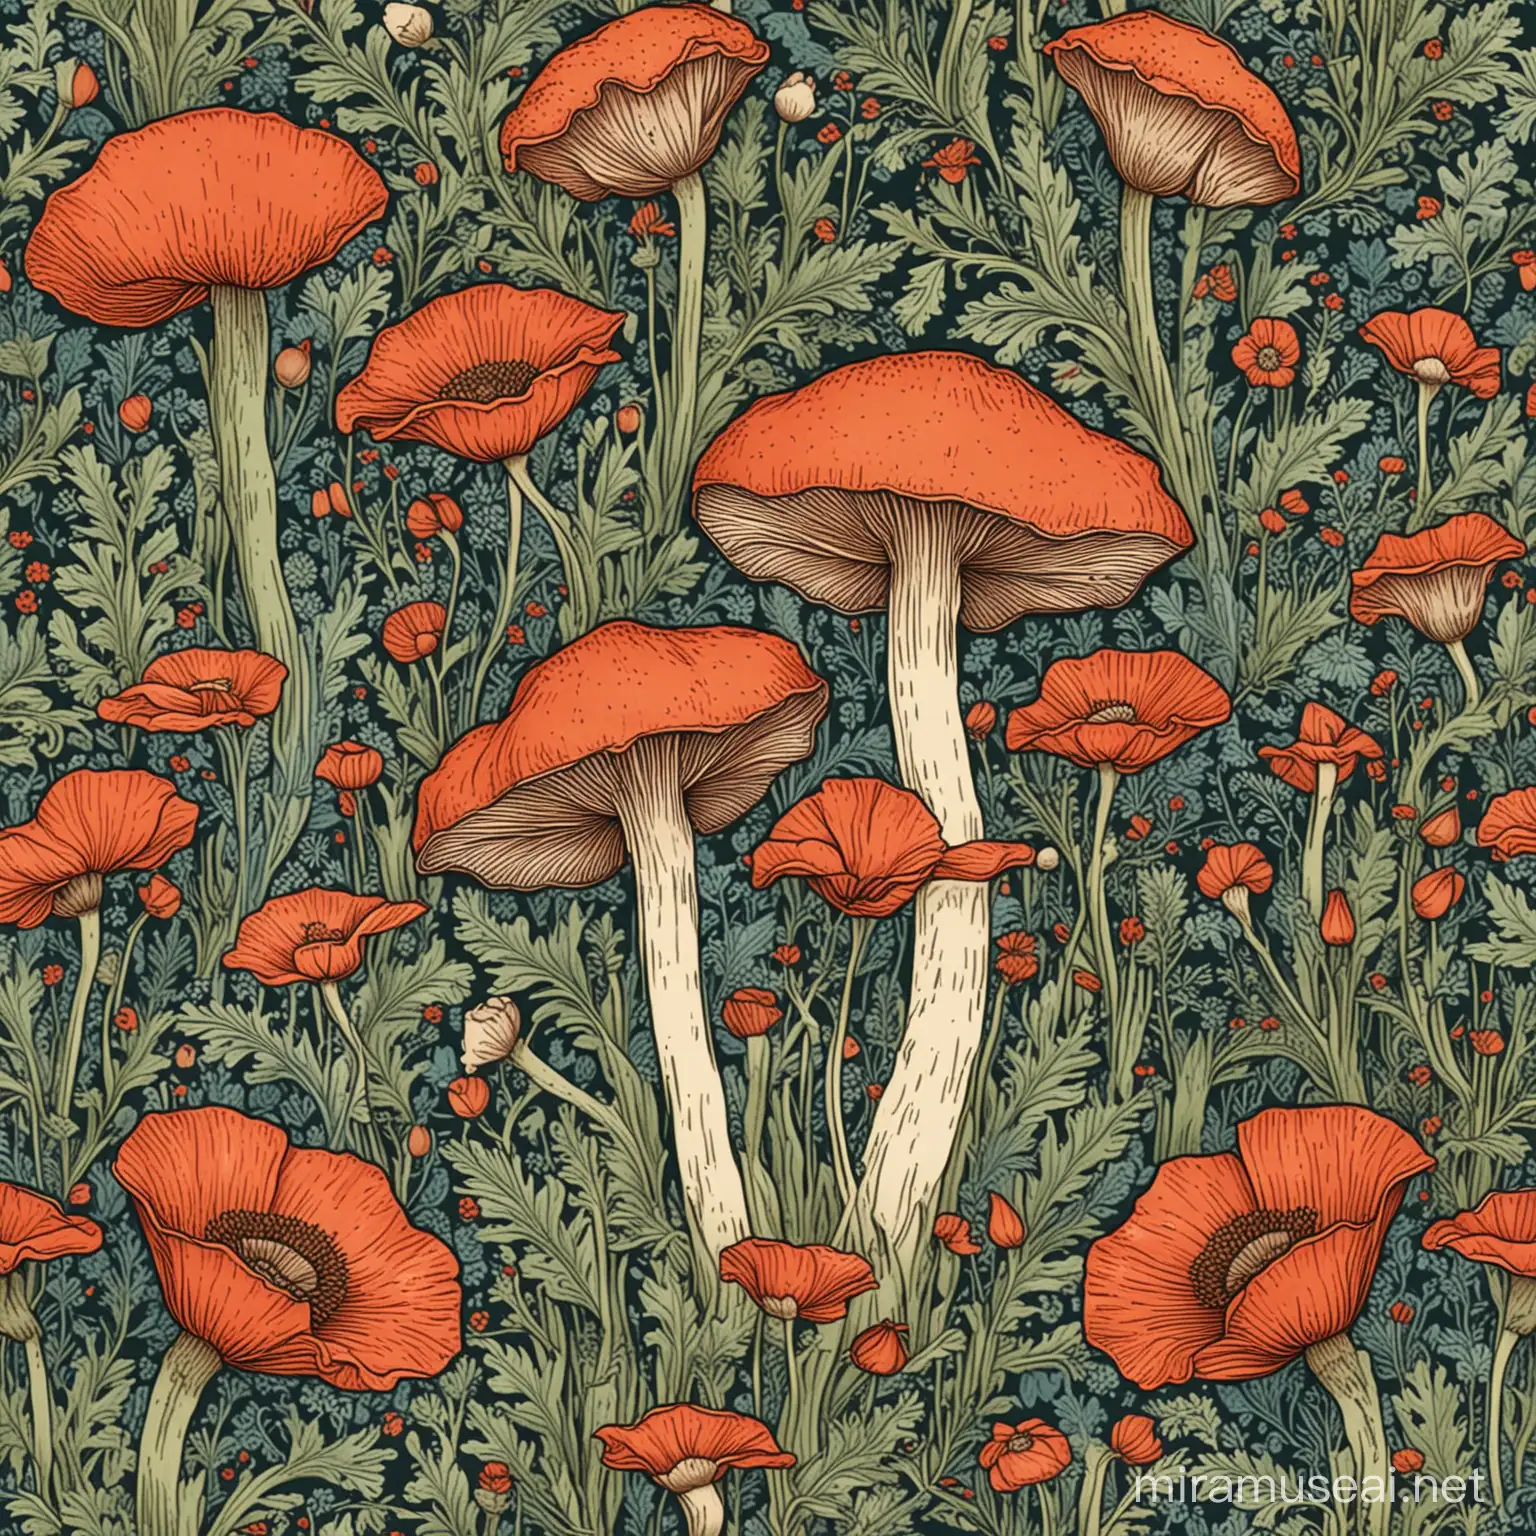 Mushroom and Poppies William Morris Inspired Illustration